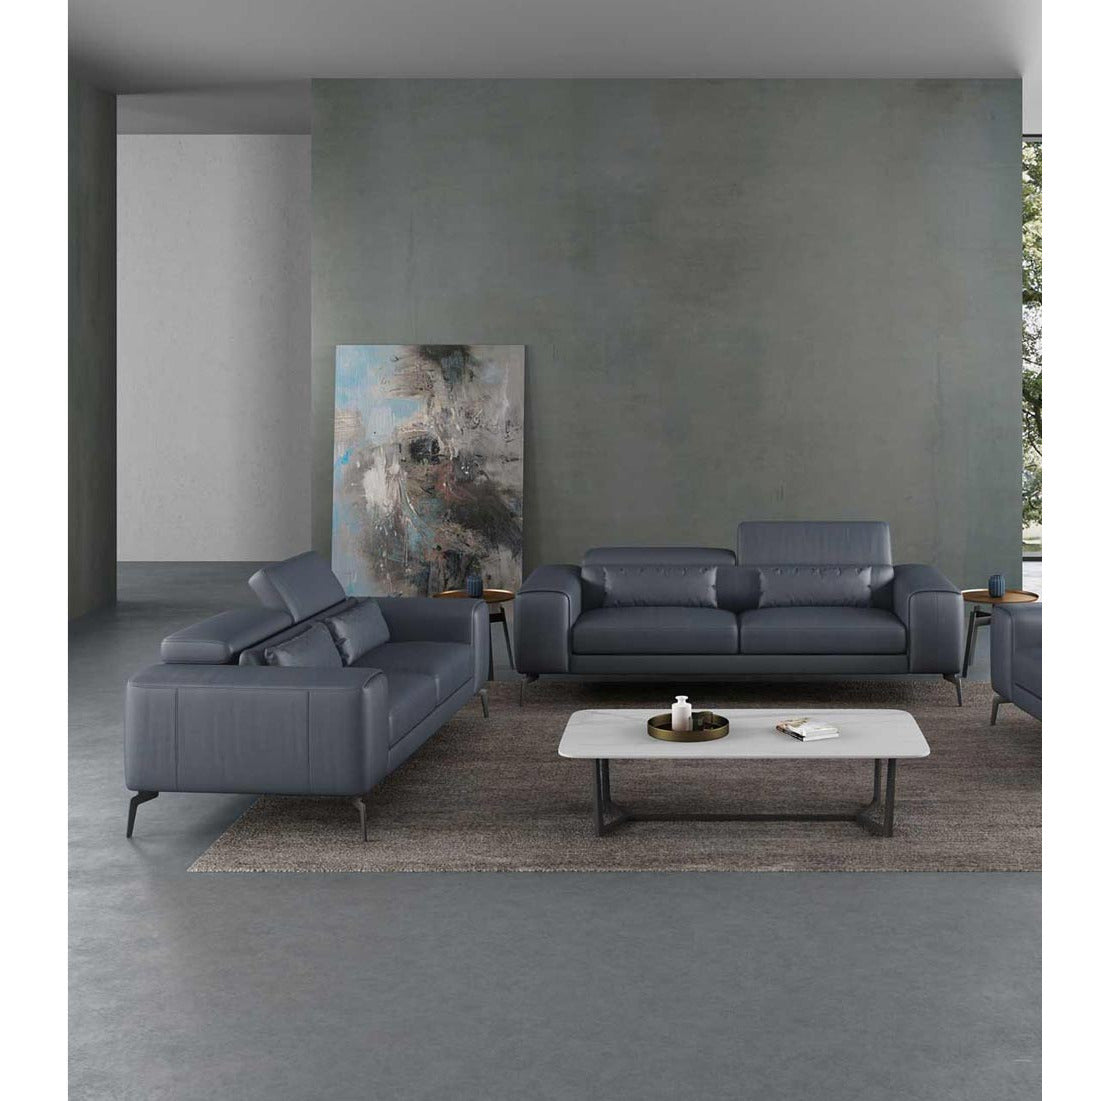 European Furniture - Cavour 2 Piece Living Room Set in Smokey Gray - 12550-2SET - New Star Living